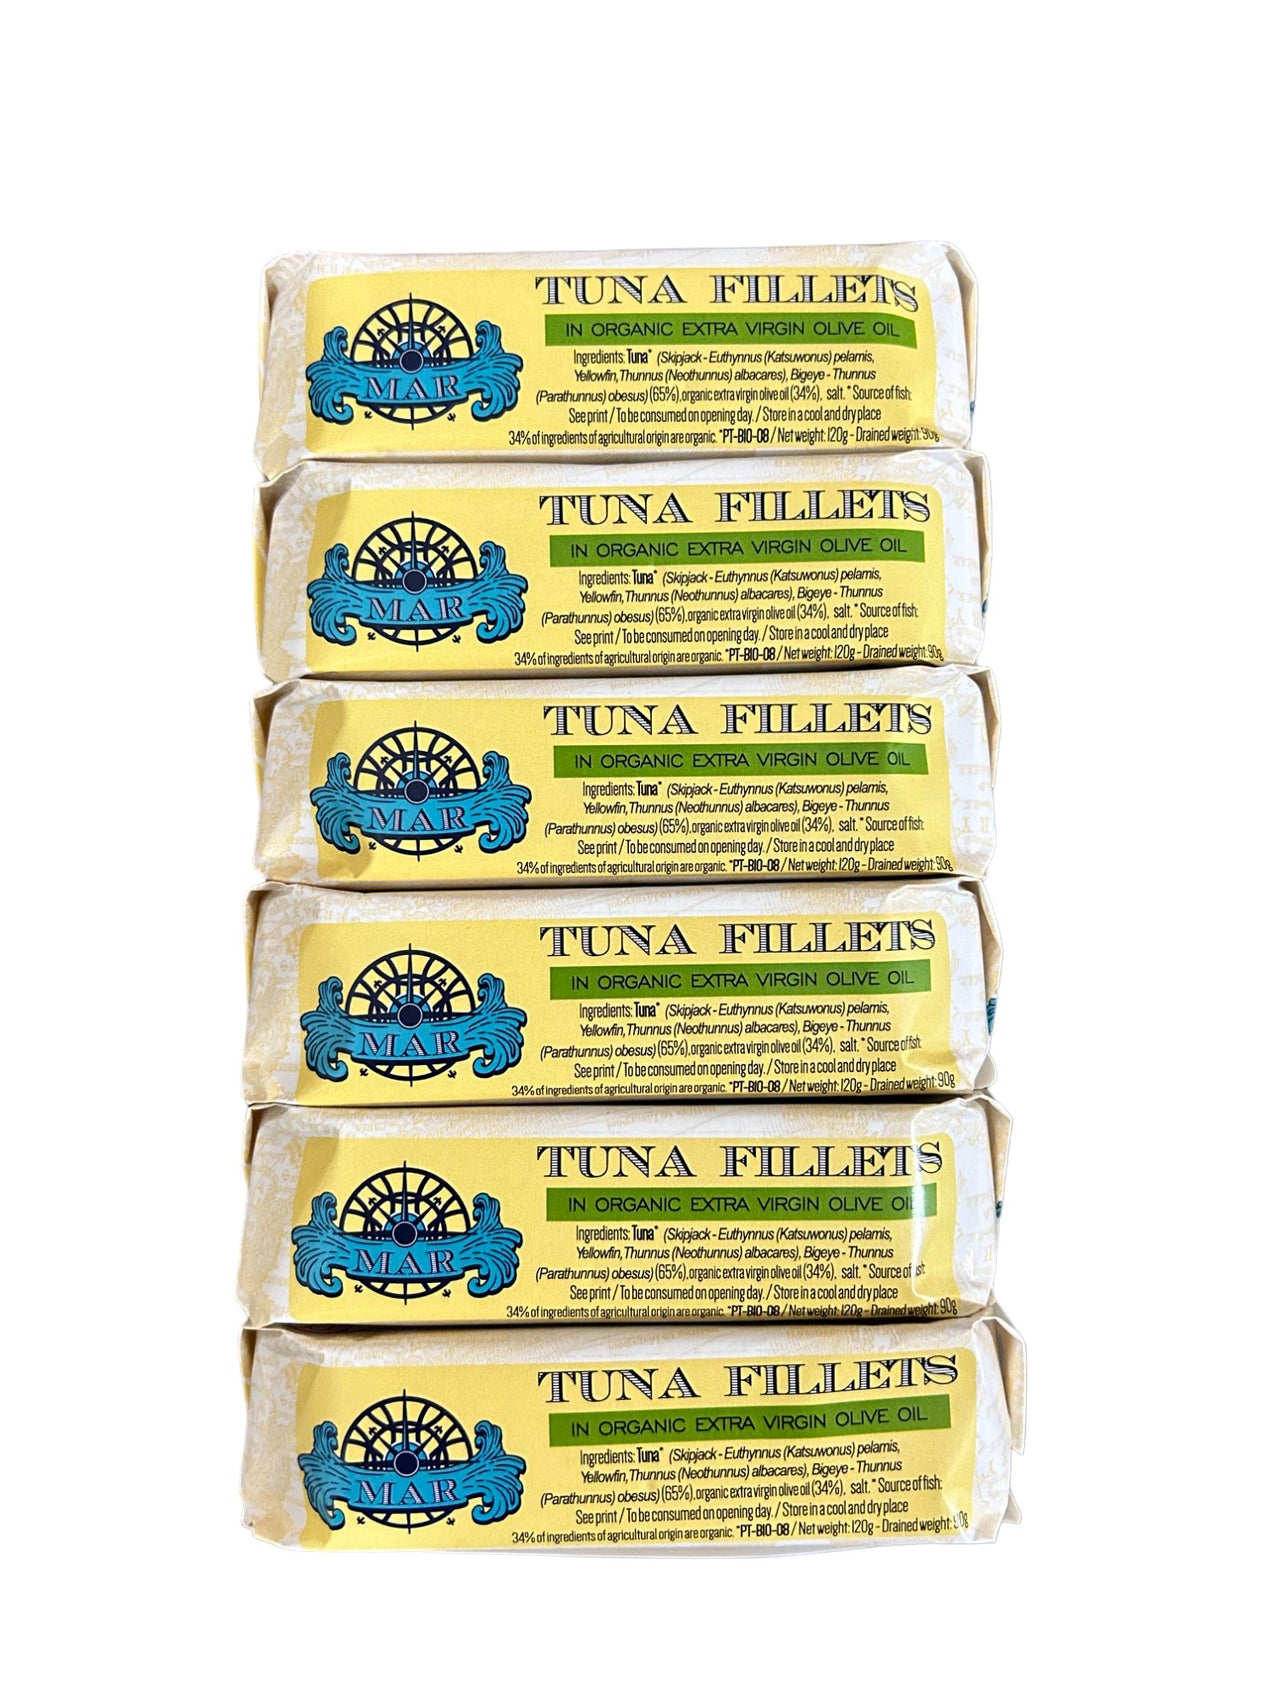 Mar Brand Tuna Fillets in Organic EVOO - 6 Pack